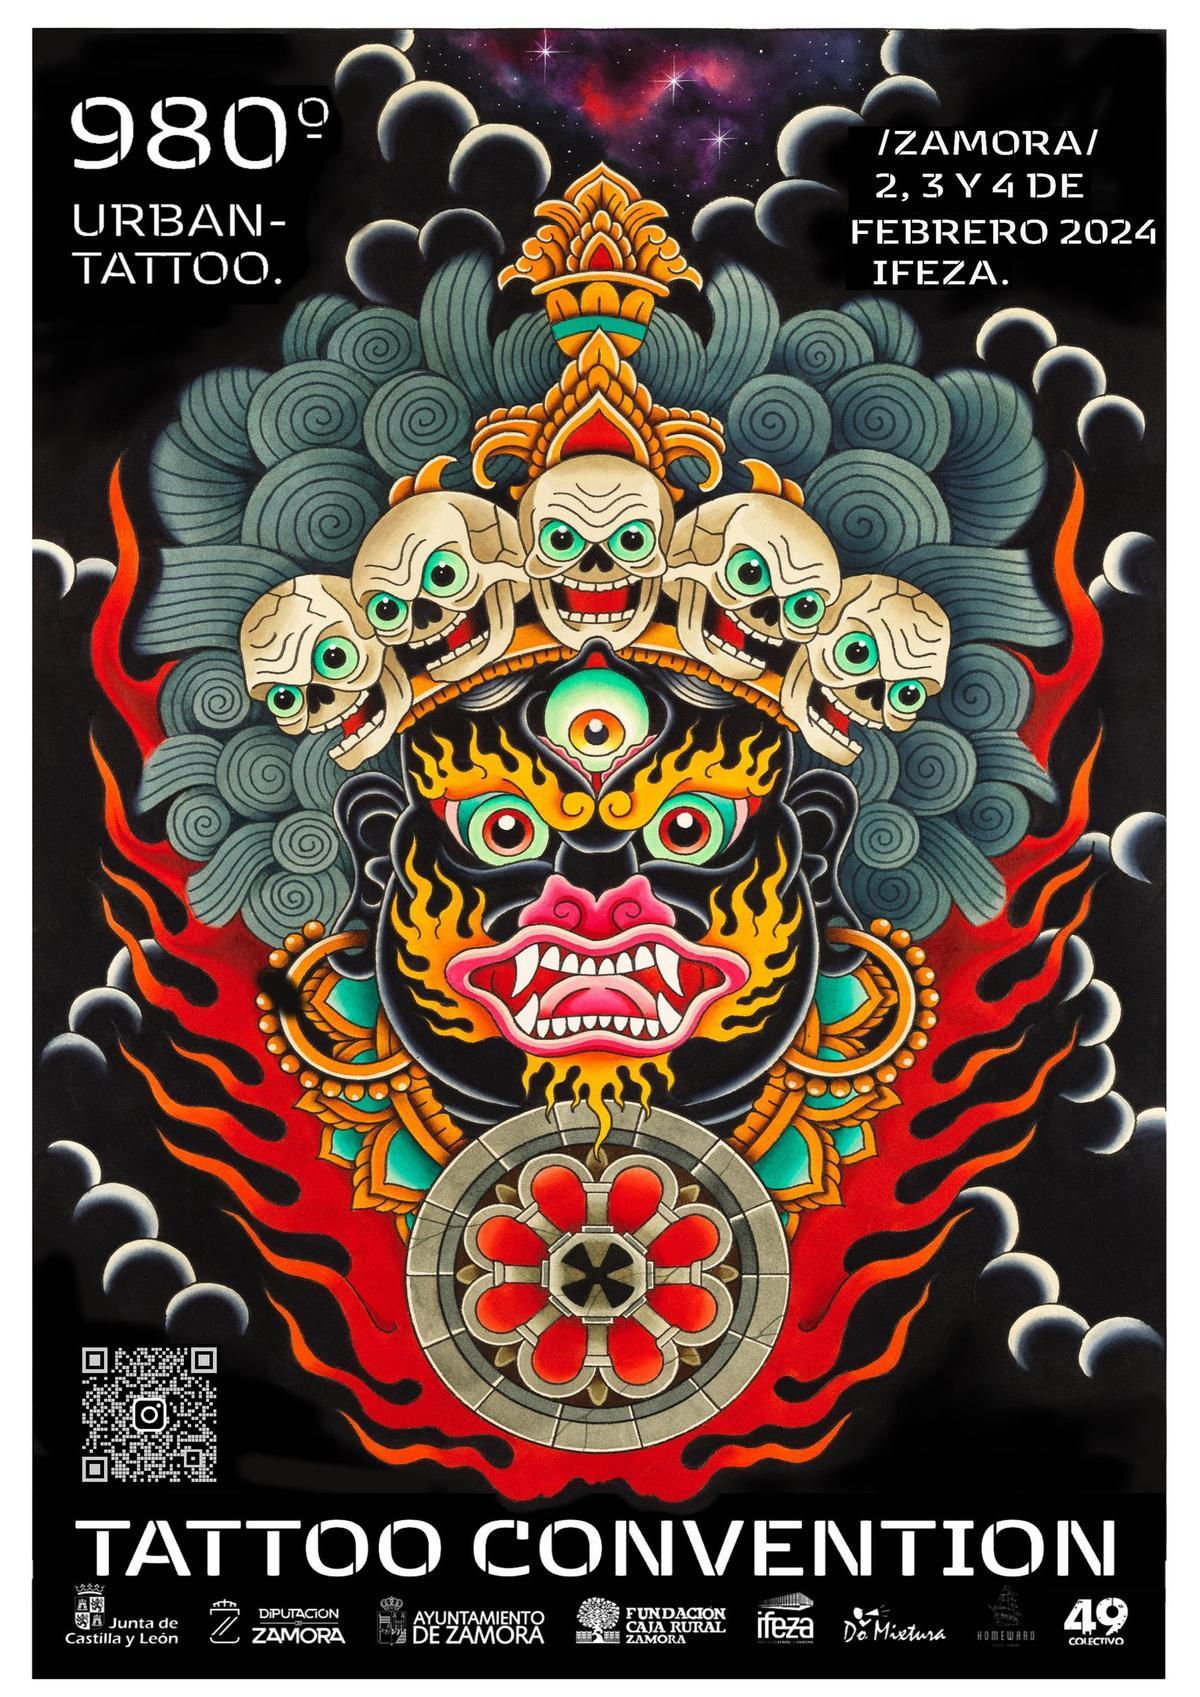 Cartel del festival 980 Urban Tattoo de tatuajes y arte urbano.